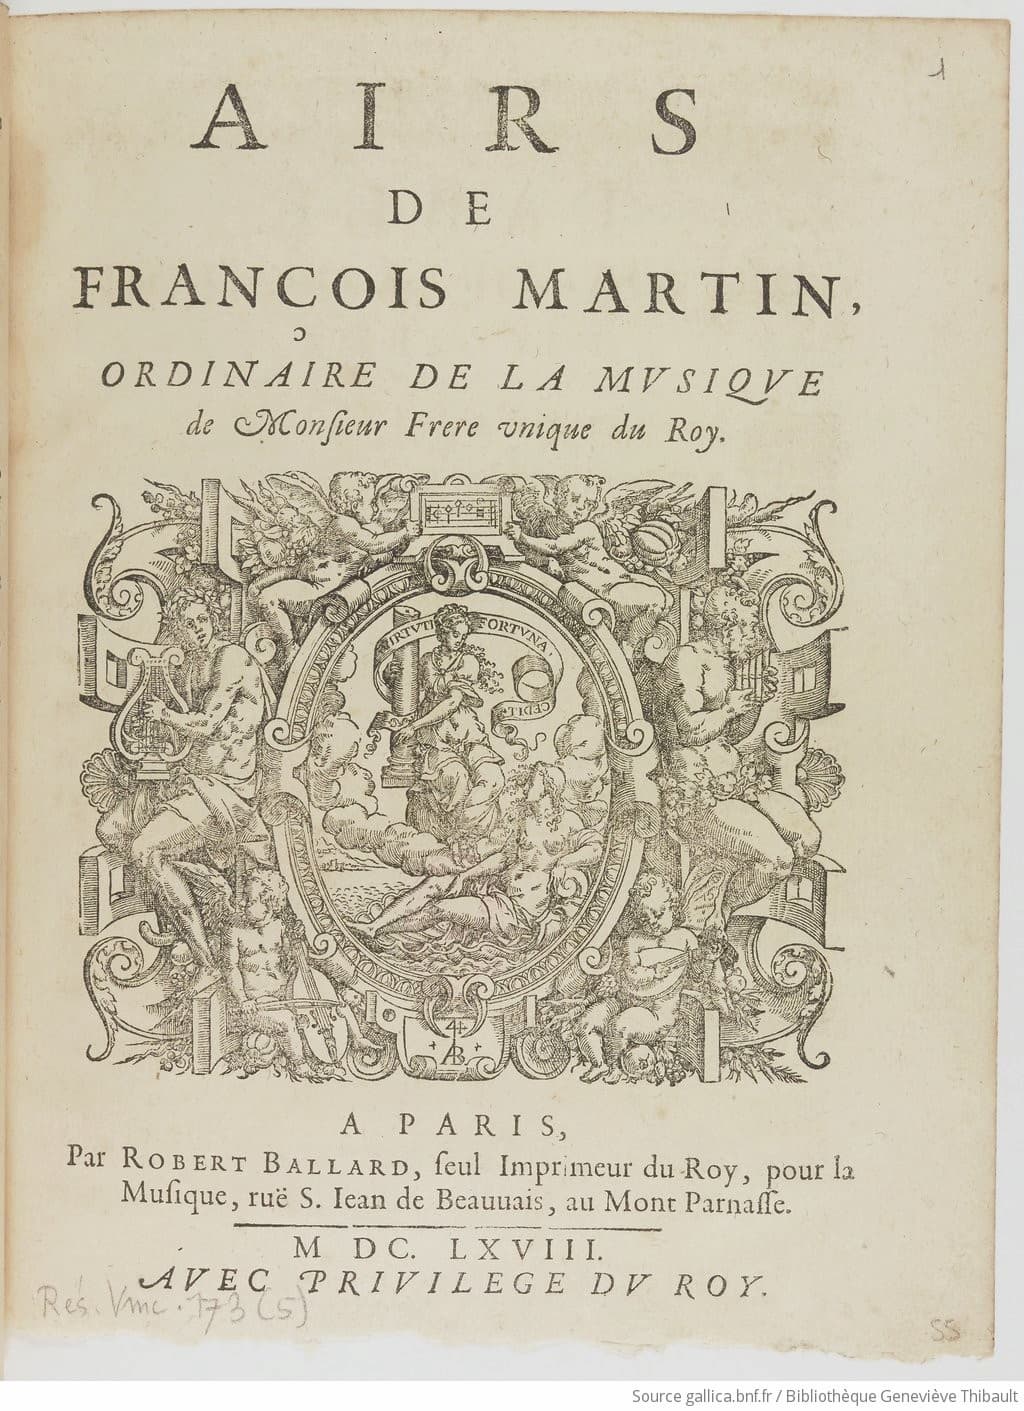 François Martin: Airs, Paris: Robert Ballard, 1668